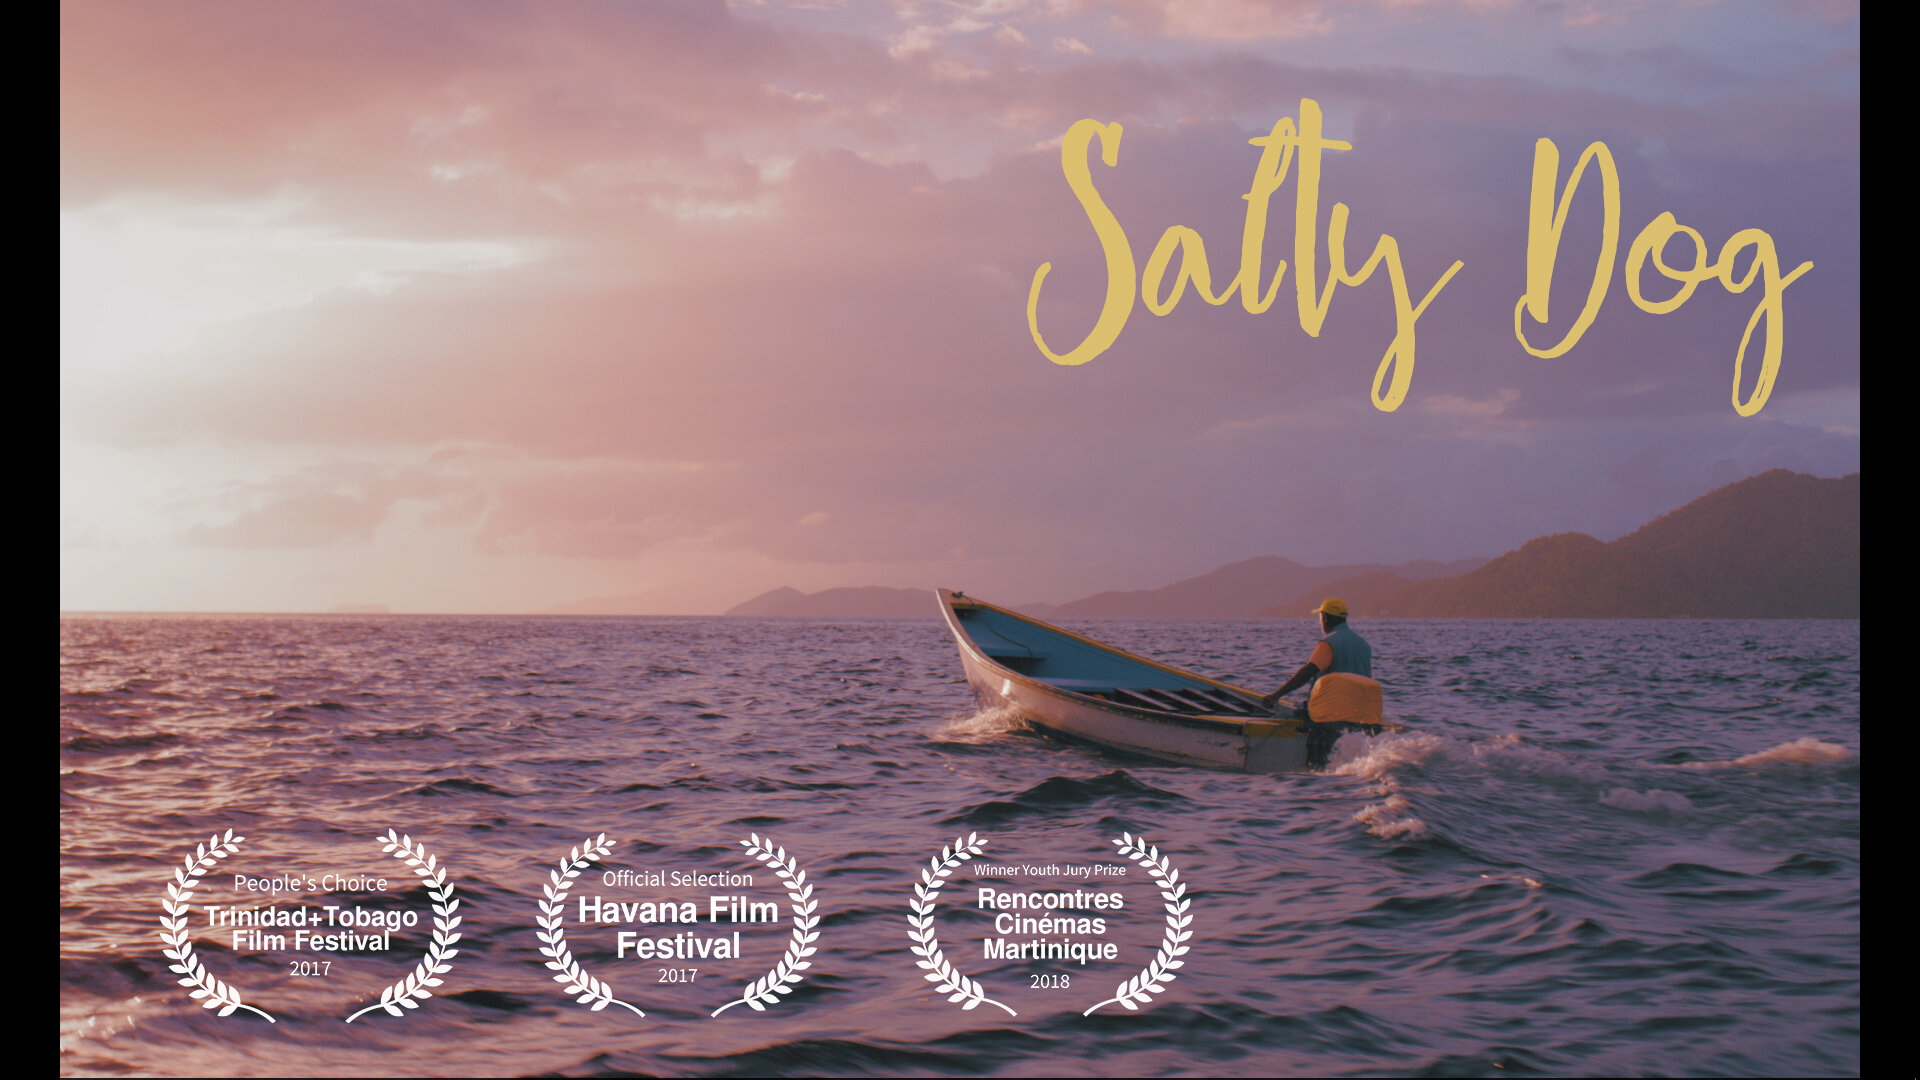 Salty dog vimeo cover.jpg